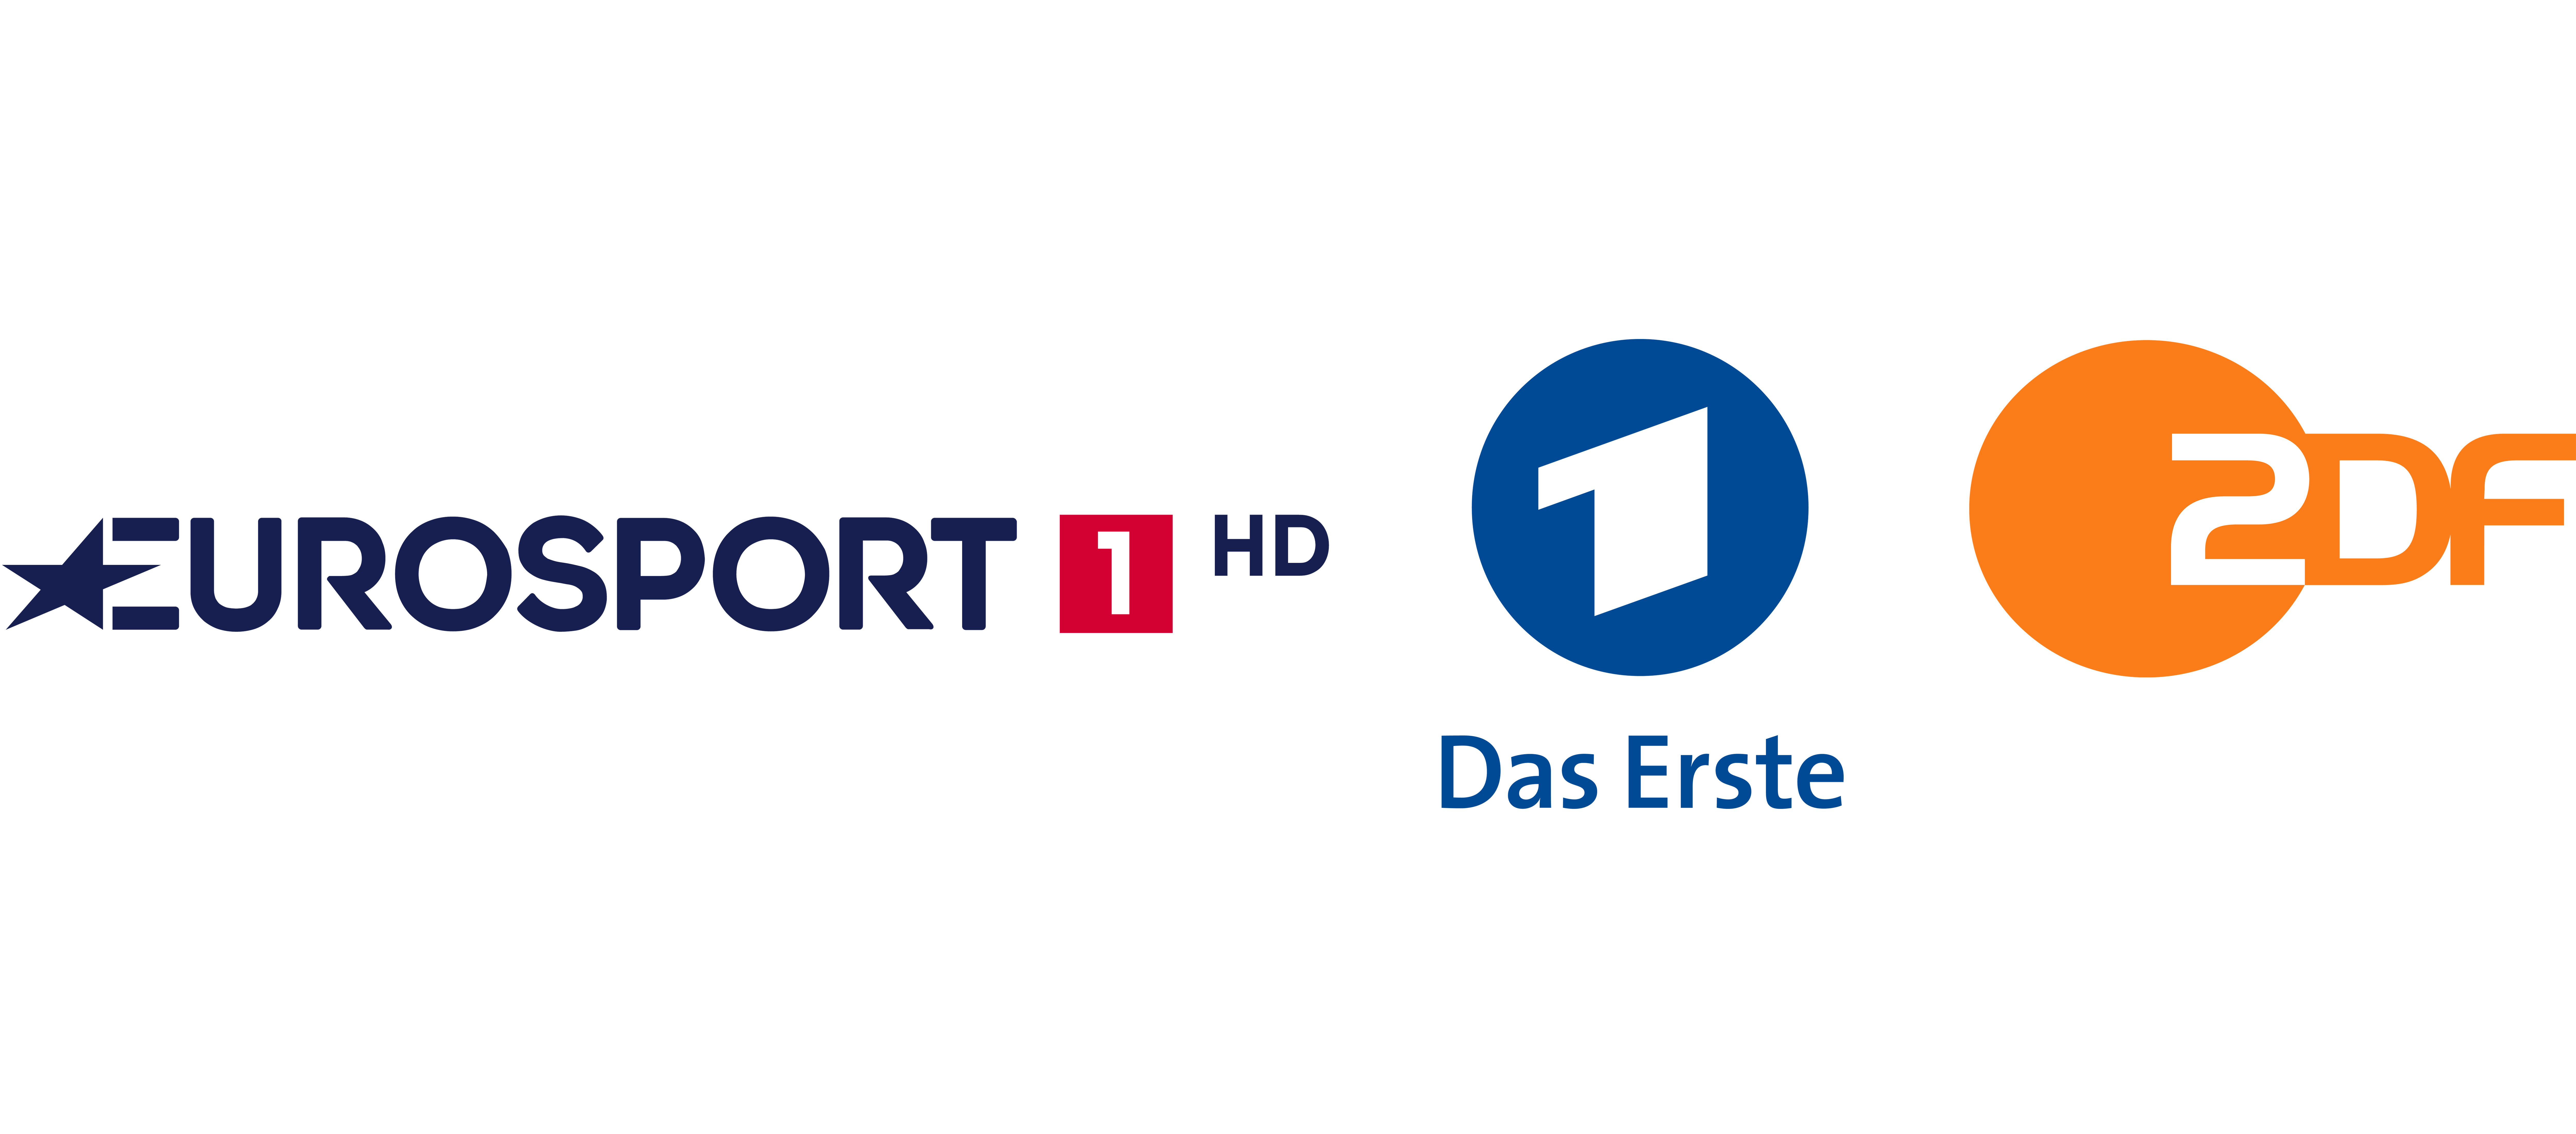 Eurosport 1 + ARD + ZDF Logos